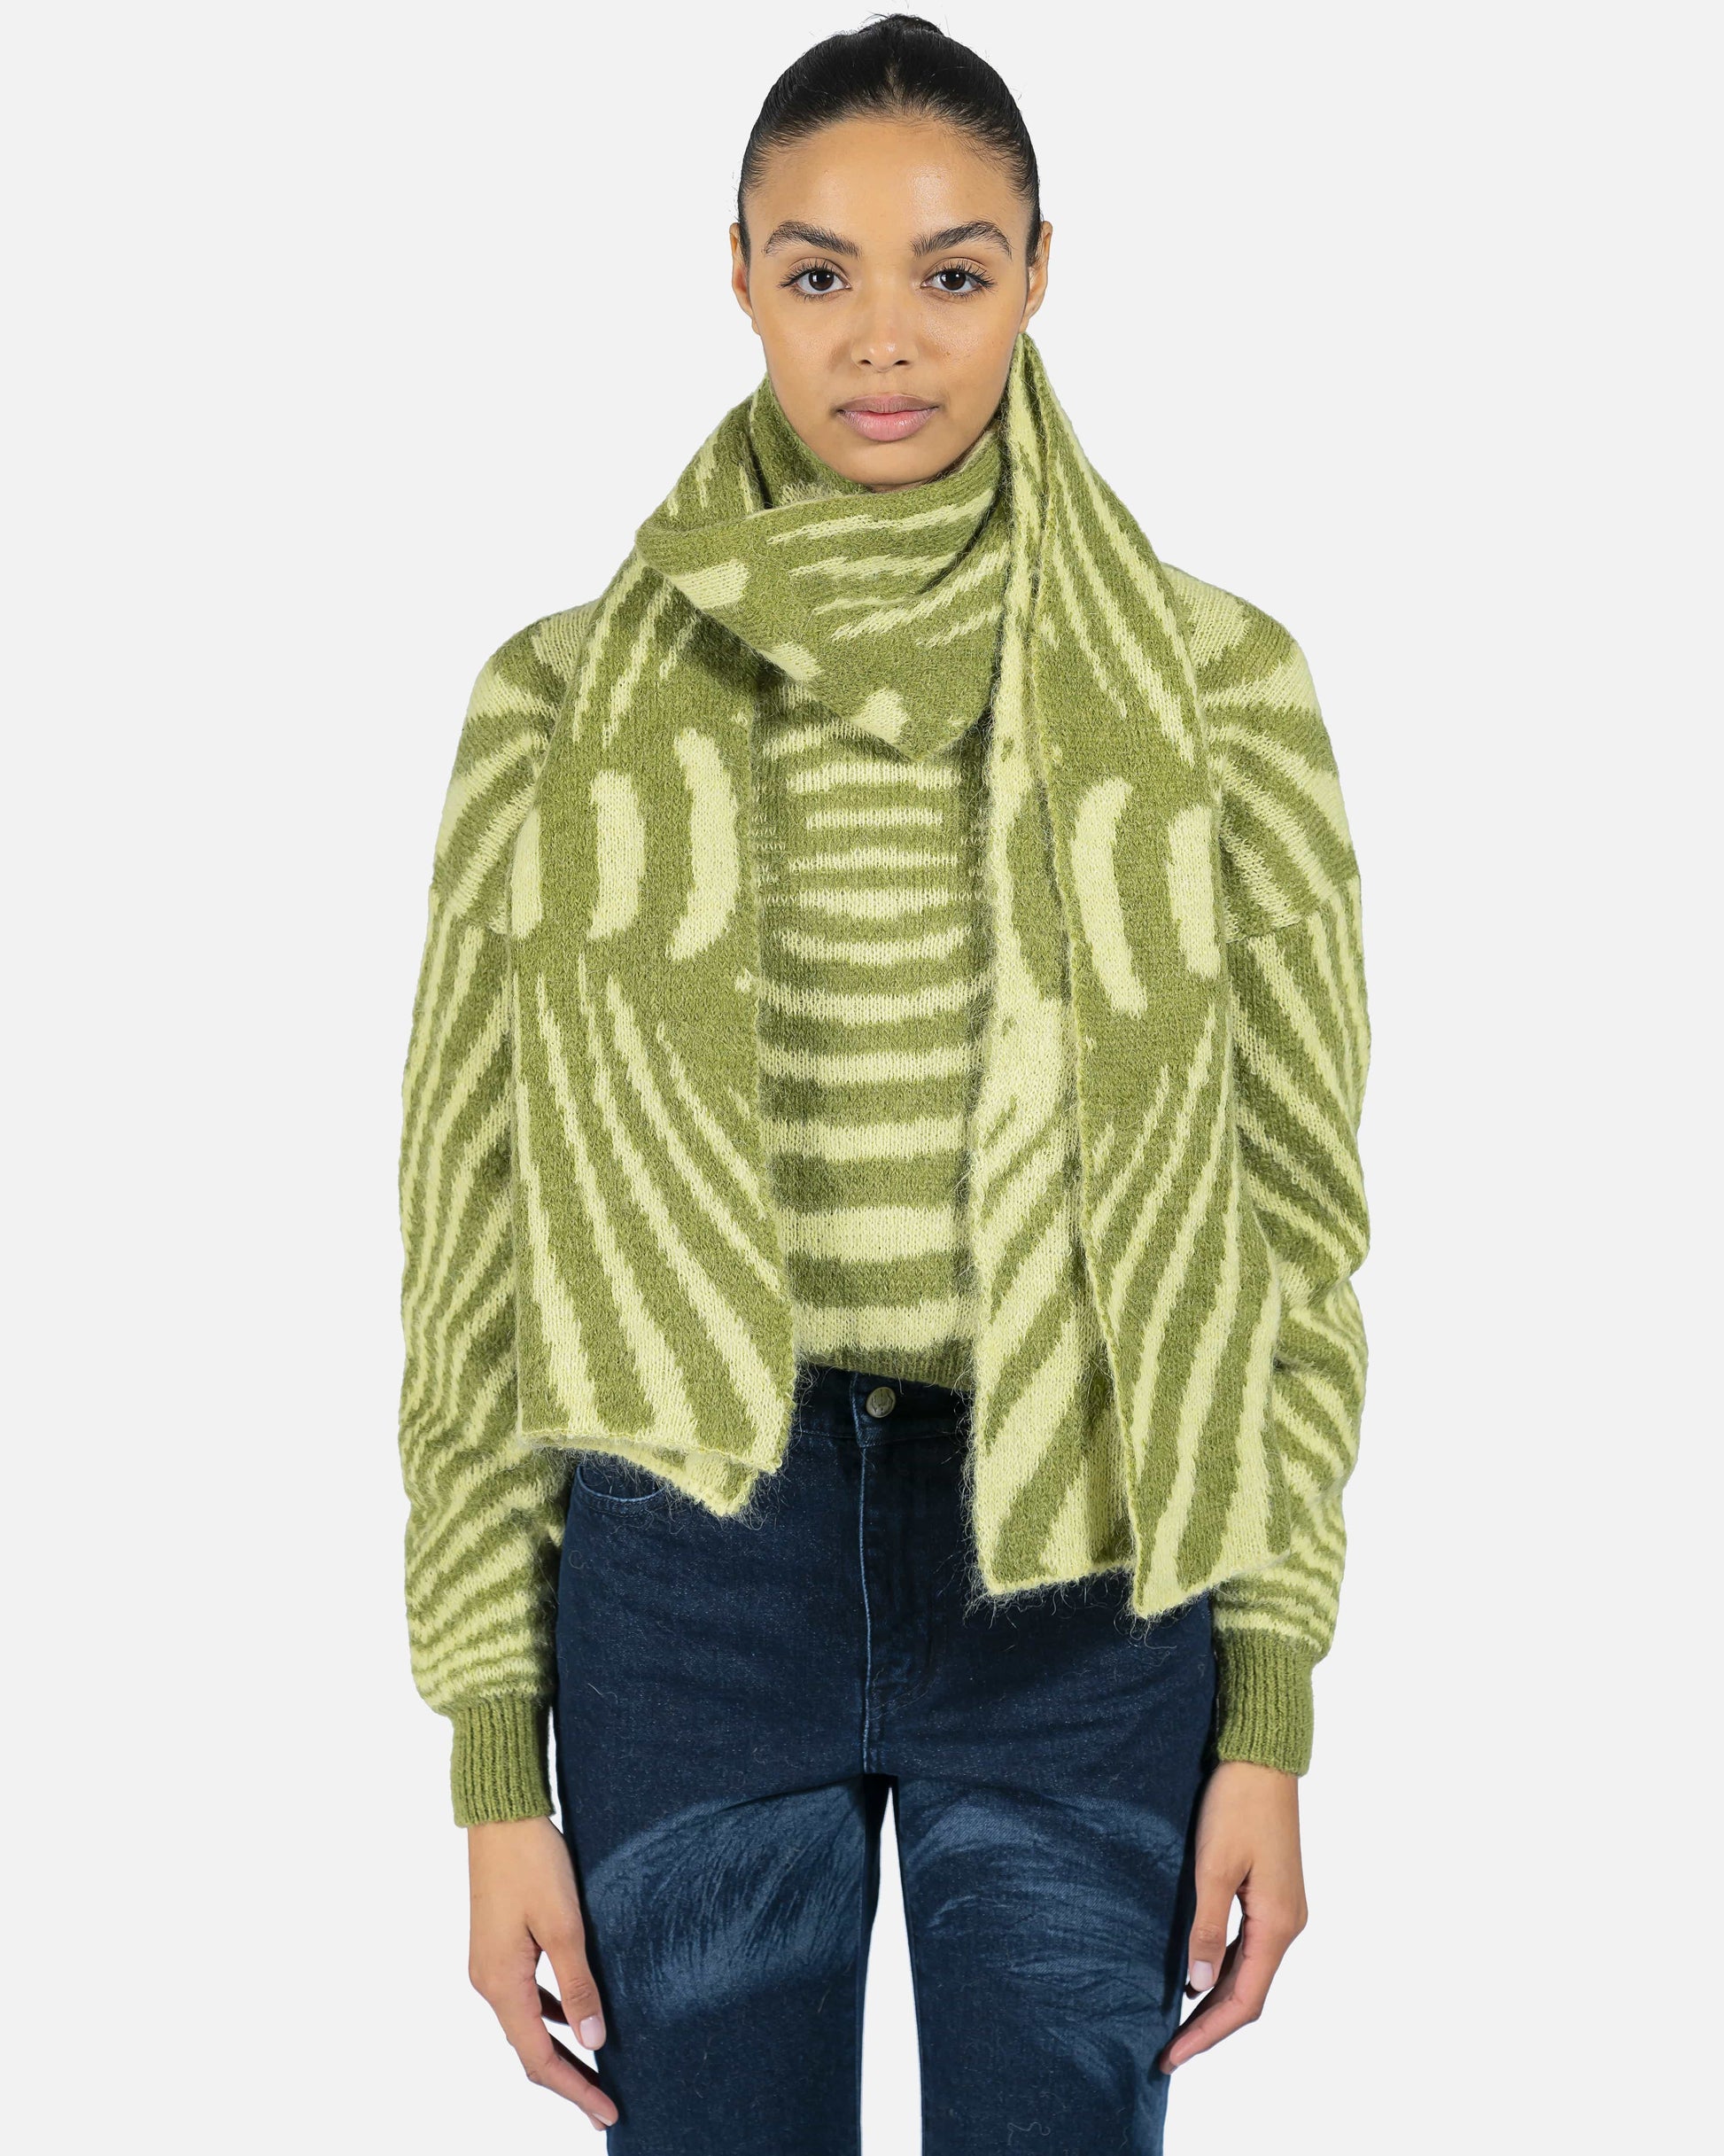 Paloma Wool Scarves Oraculo Scarf in Medium Green